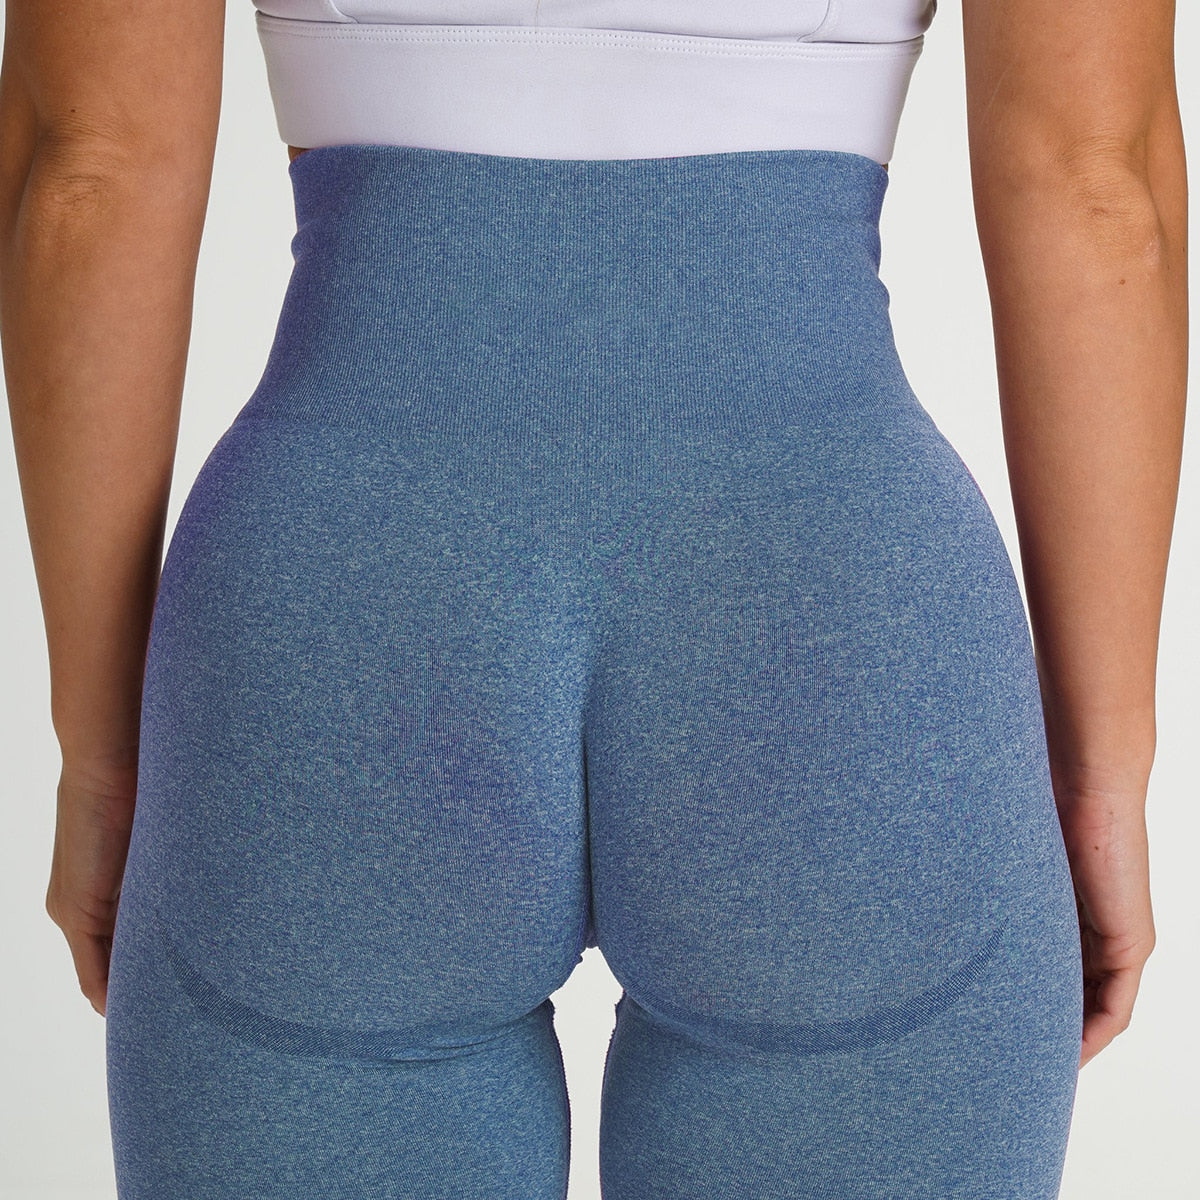 Seamless Leggings Women Sport Slim ShortsTights Fitness High Waist Women Clothing Gym Workout Pants Female Pants blue Shorts